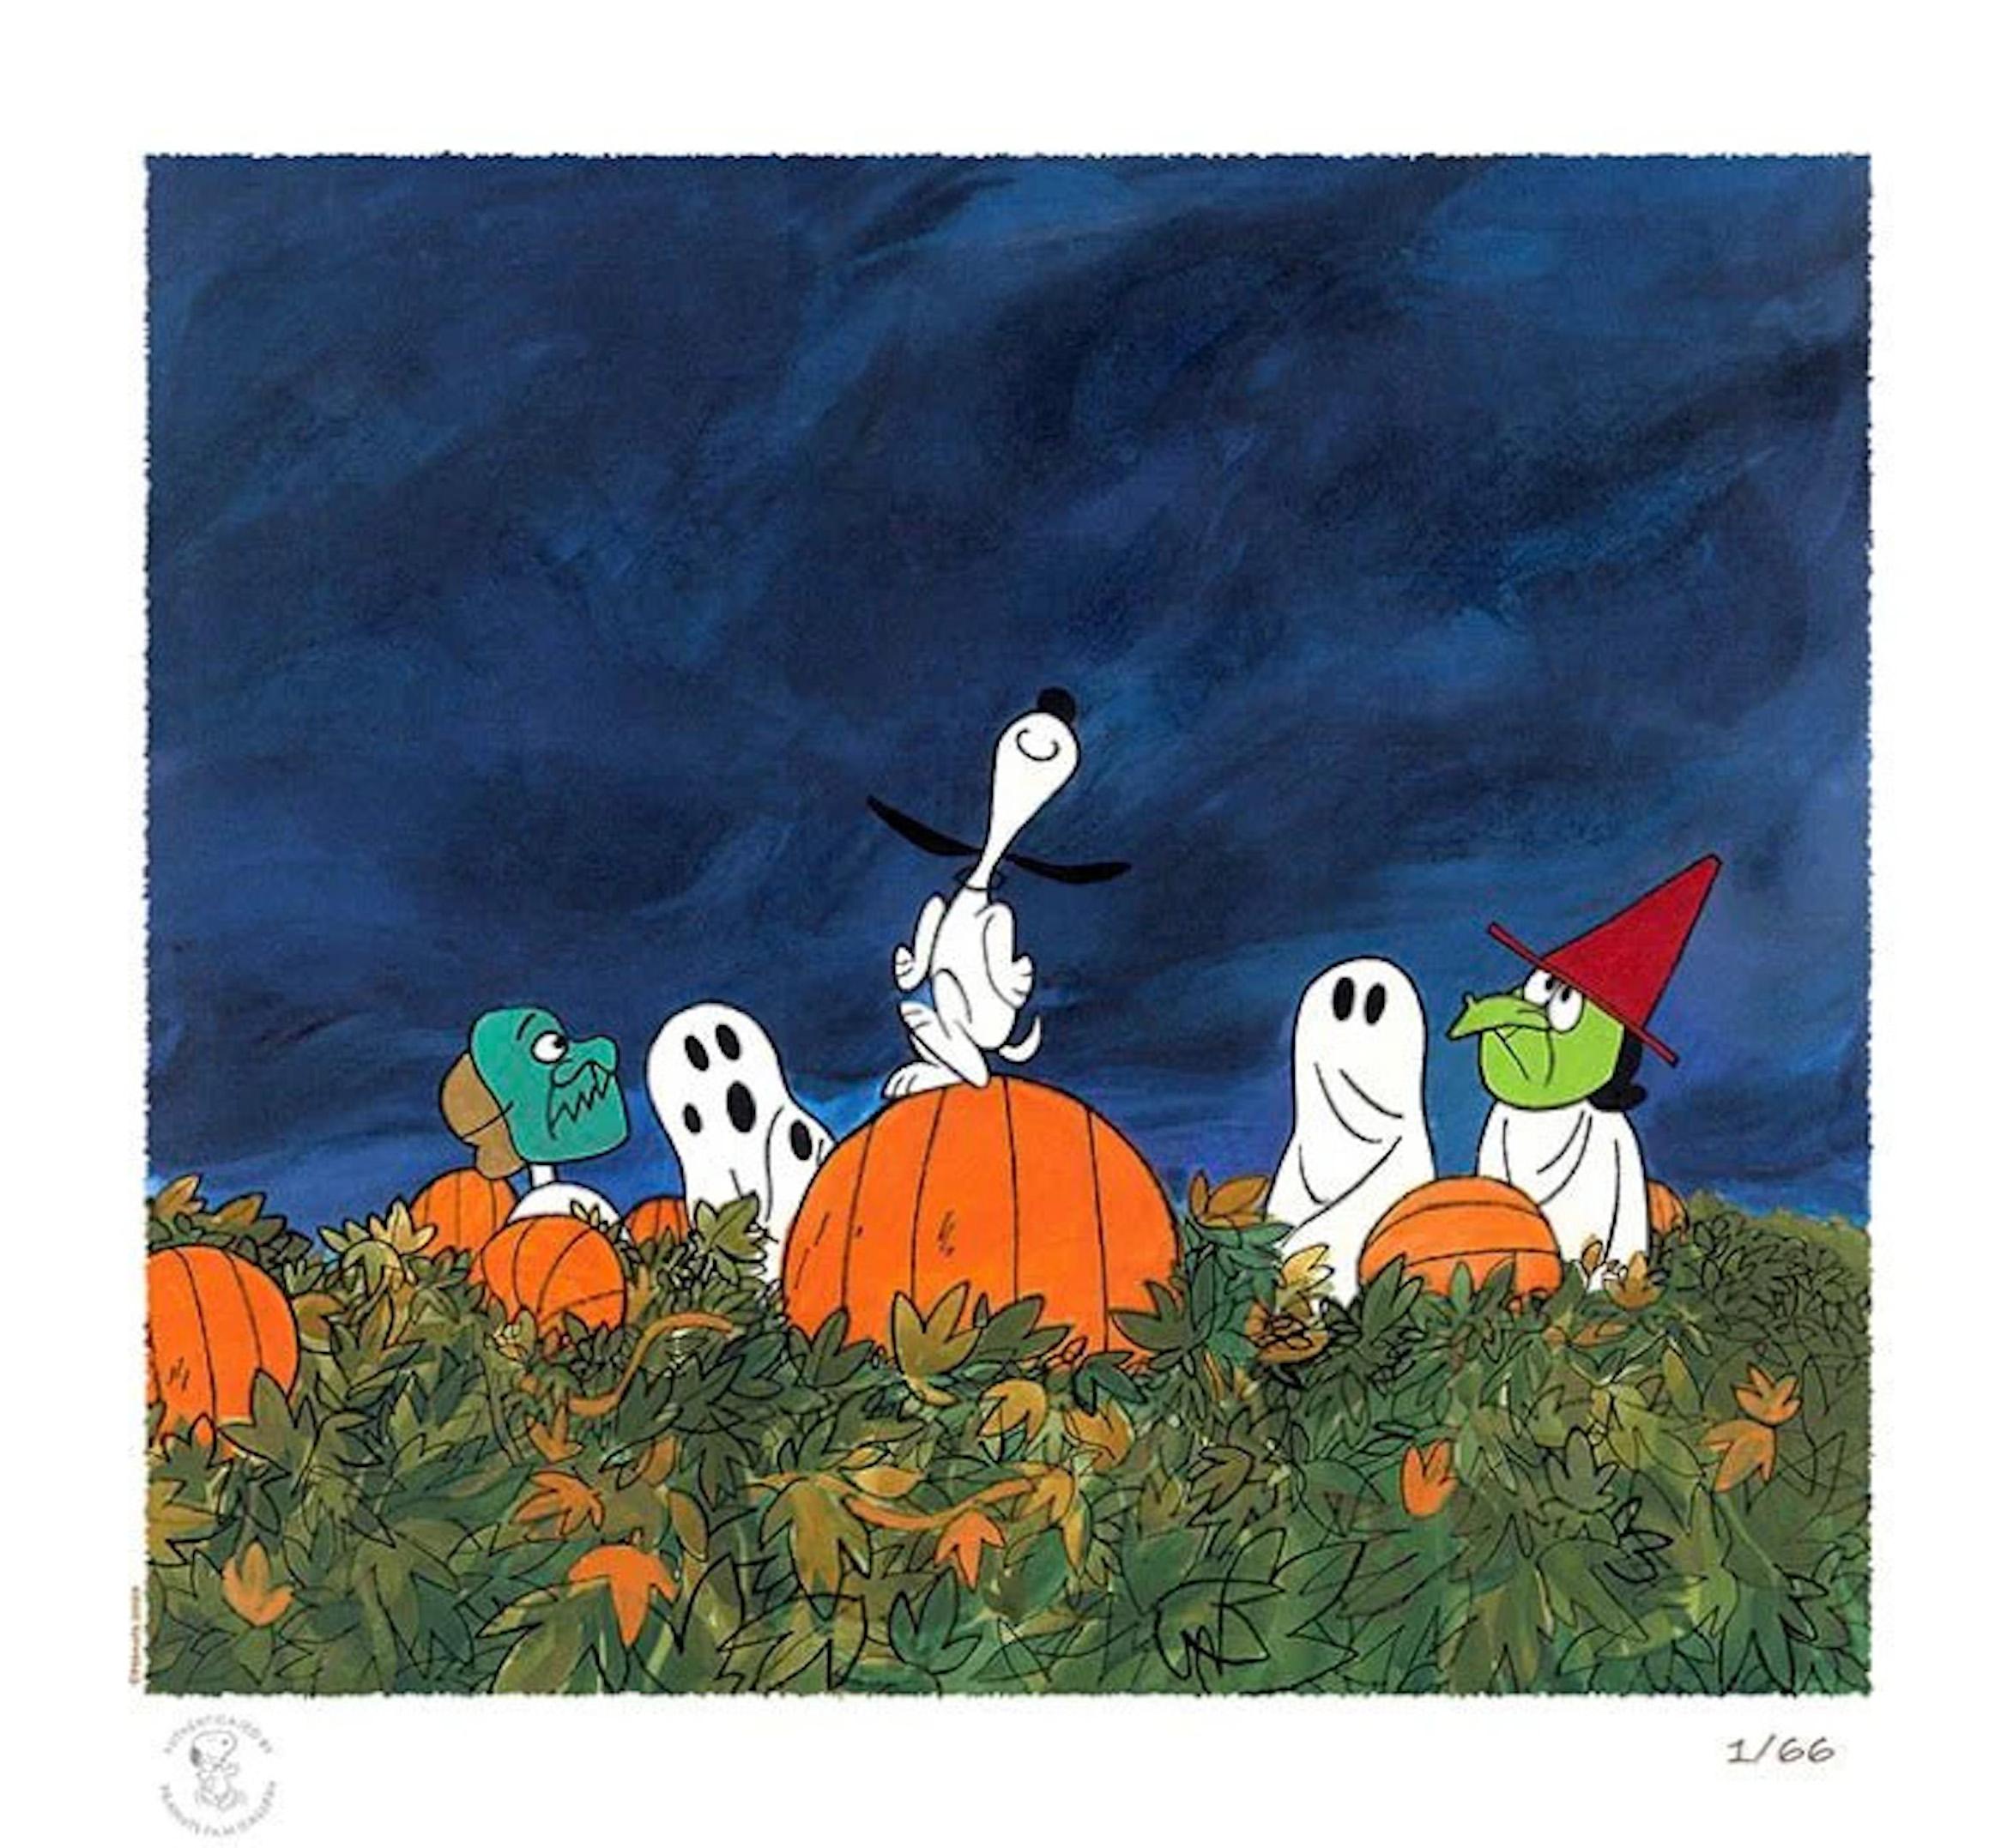 Peanuts Limited Edition Giclee Print: It's The Great Pumpkin! - Art by Peanuts Fine Artists